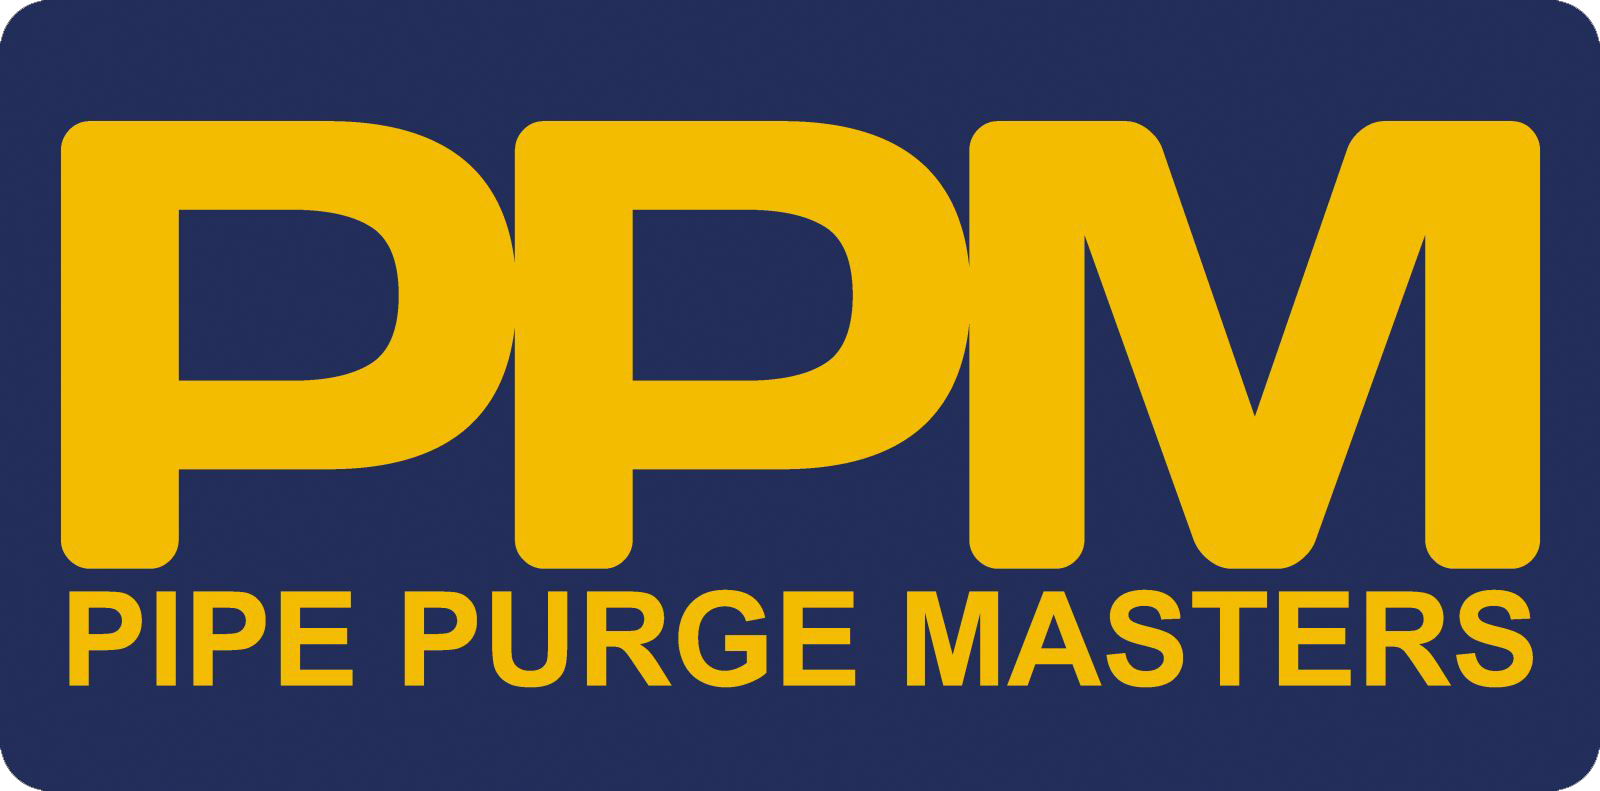 Pipe Purge Masters